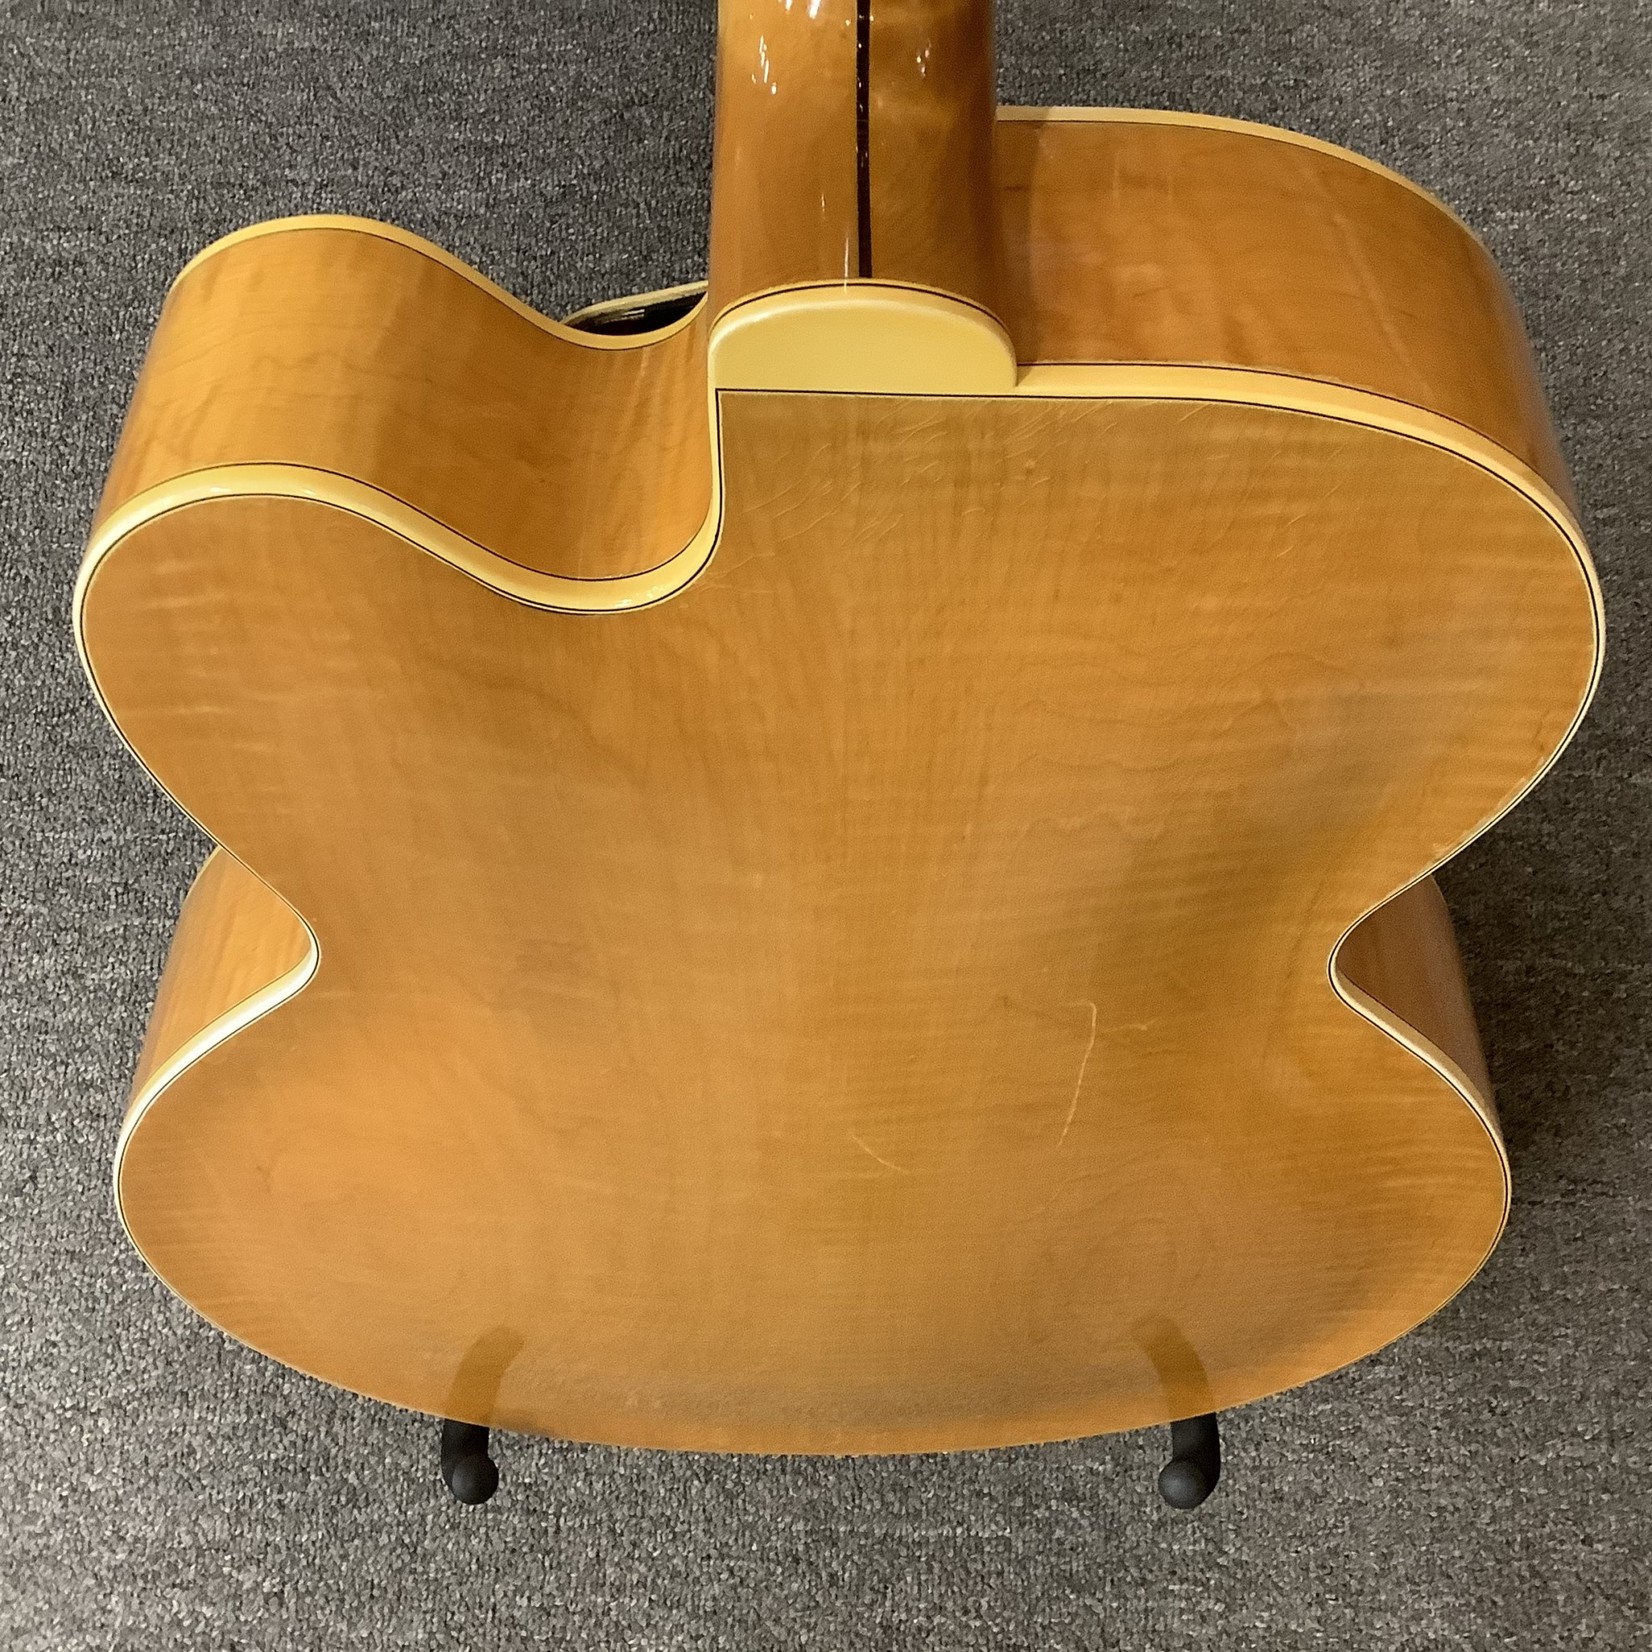 Gibson 1956 Gibson L5-N Cutaway Acoustic